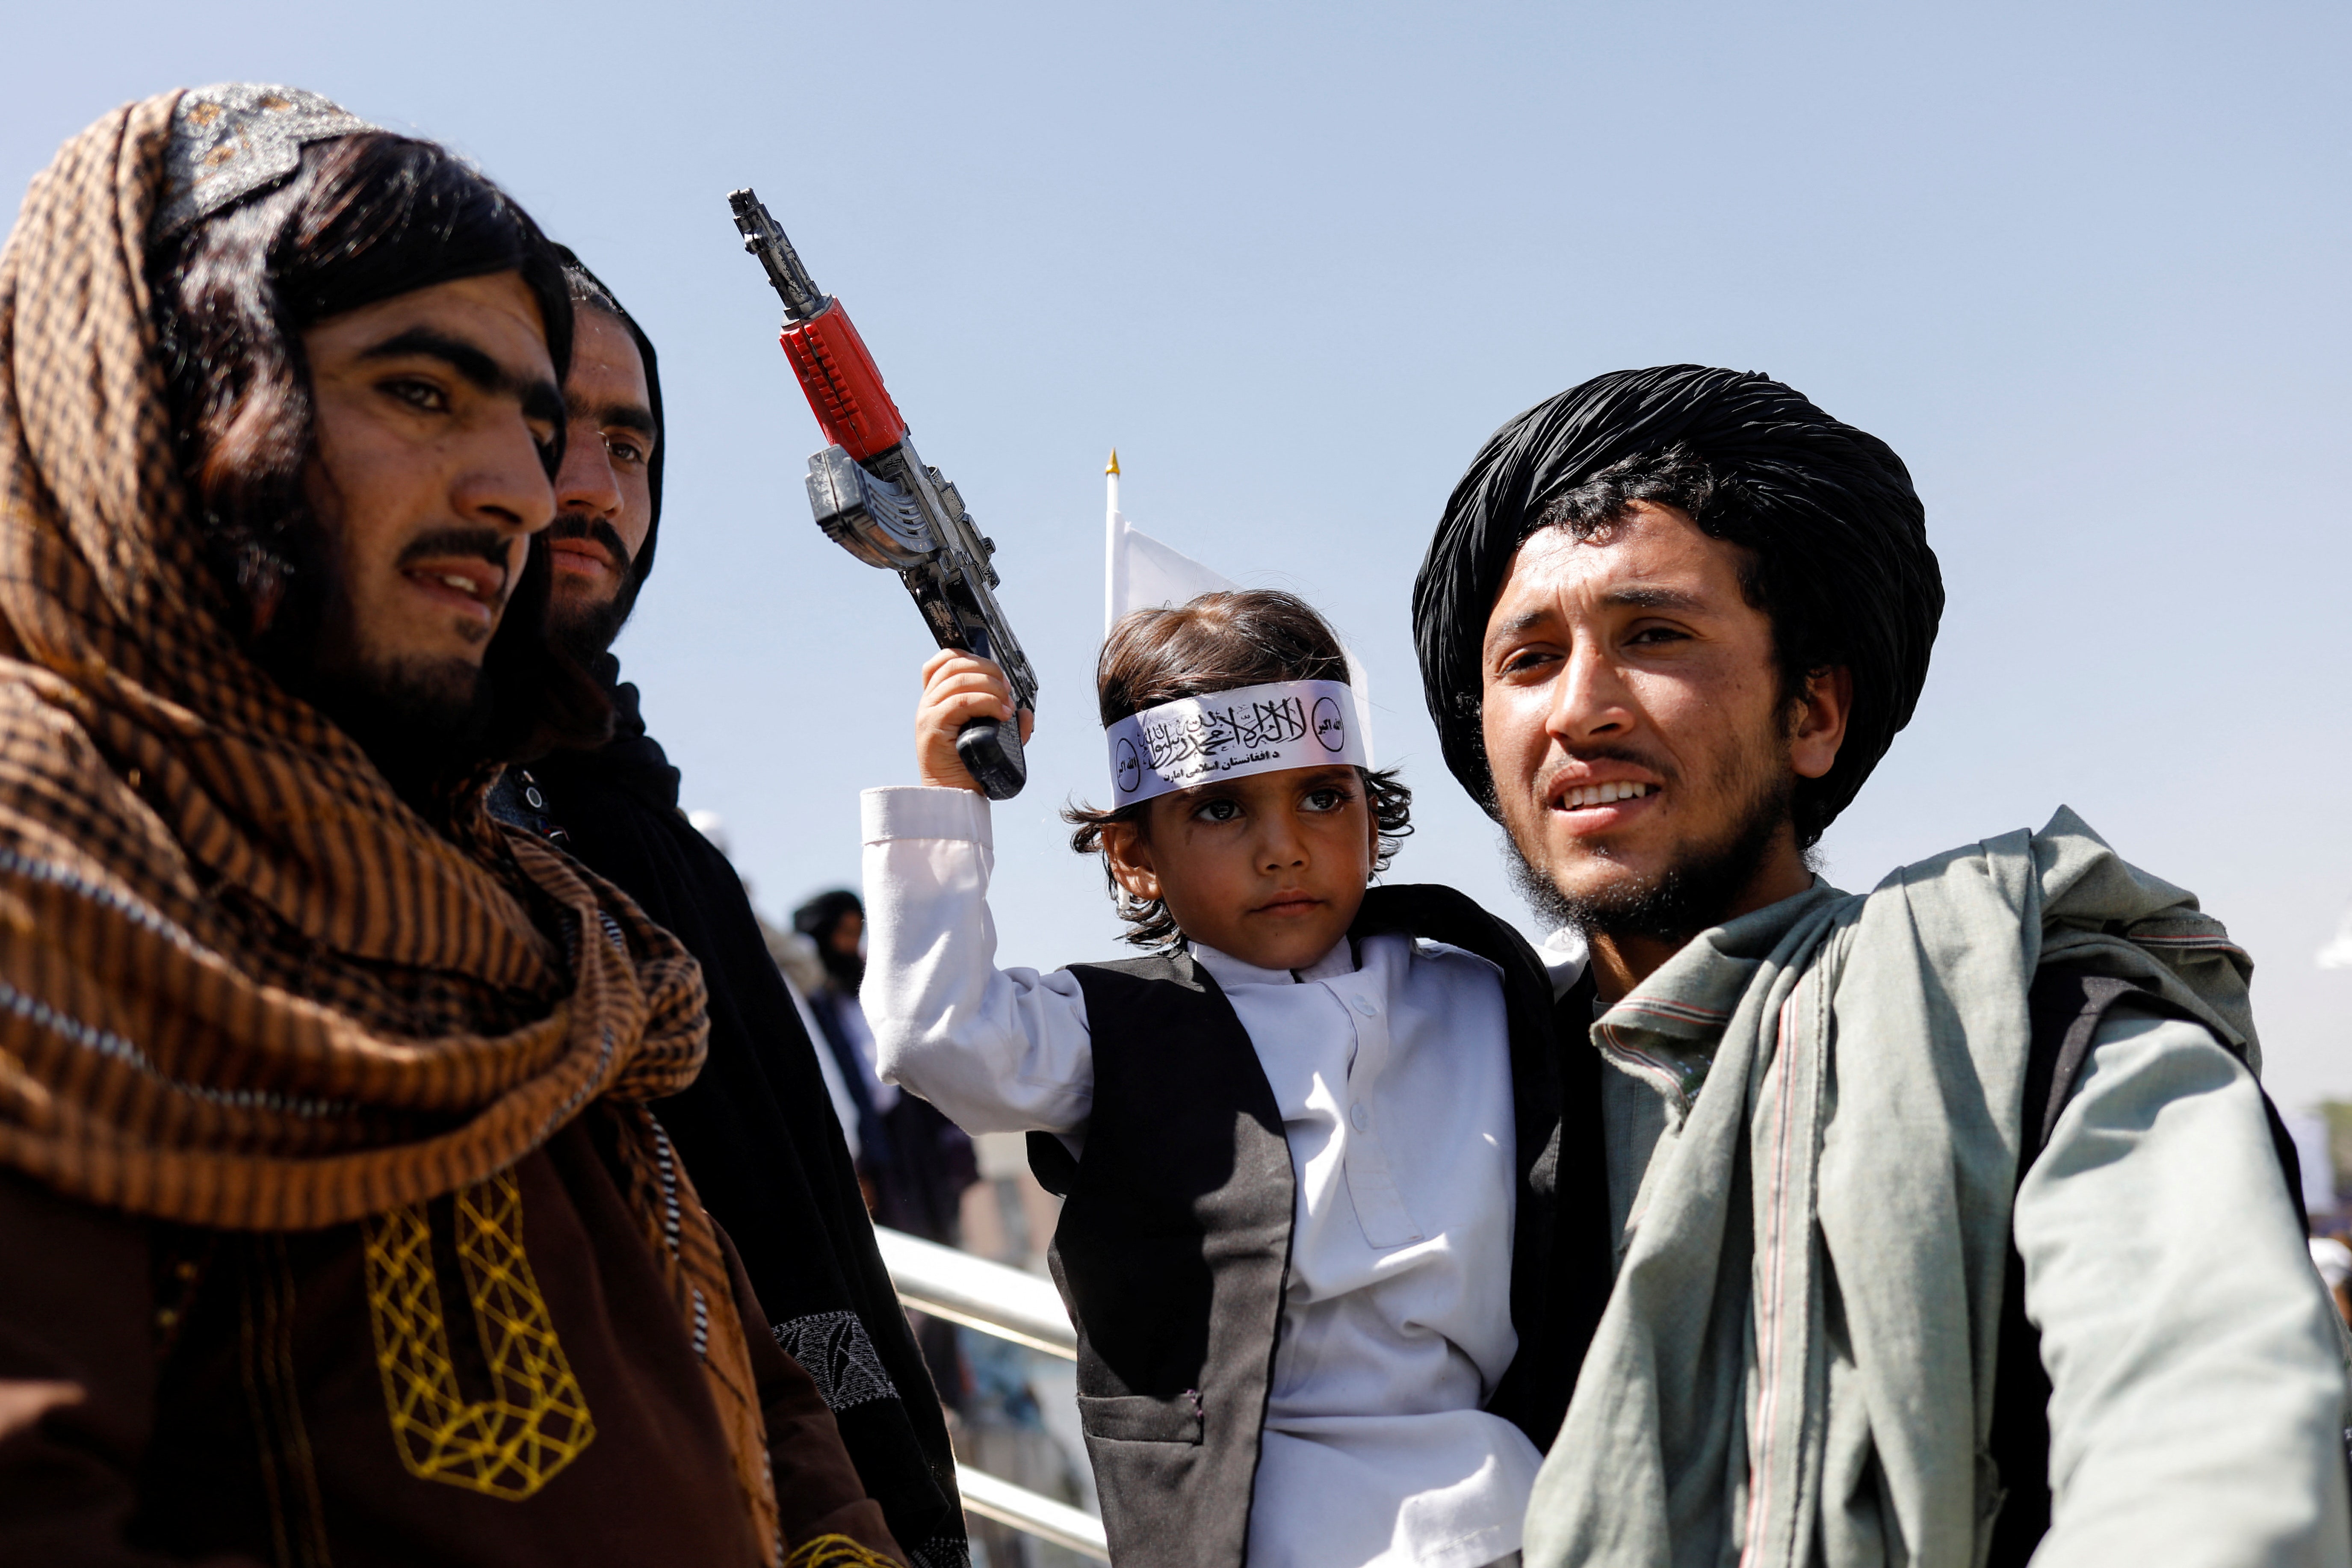 IG: لم يتم احتساب تبرع بايدن المليار دولار لأفغانستان التي تسيطر عليها طالبان